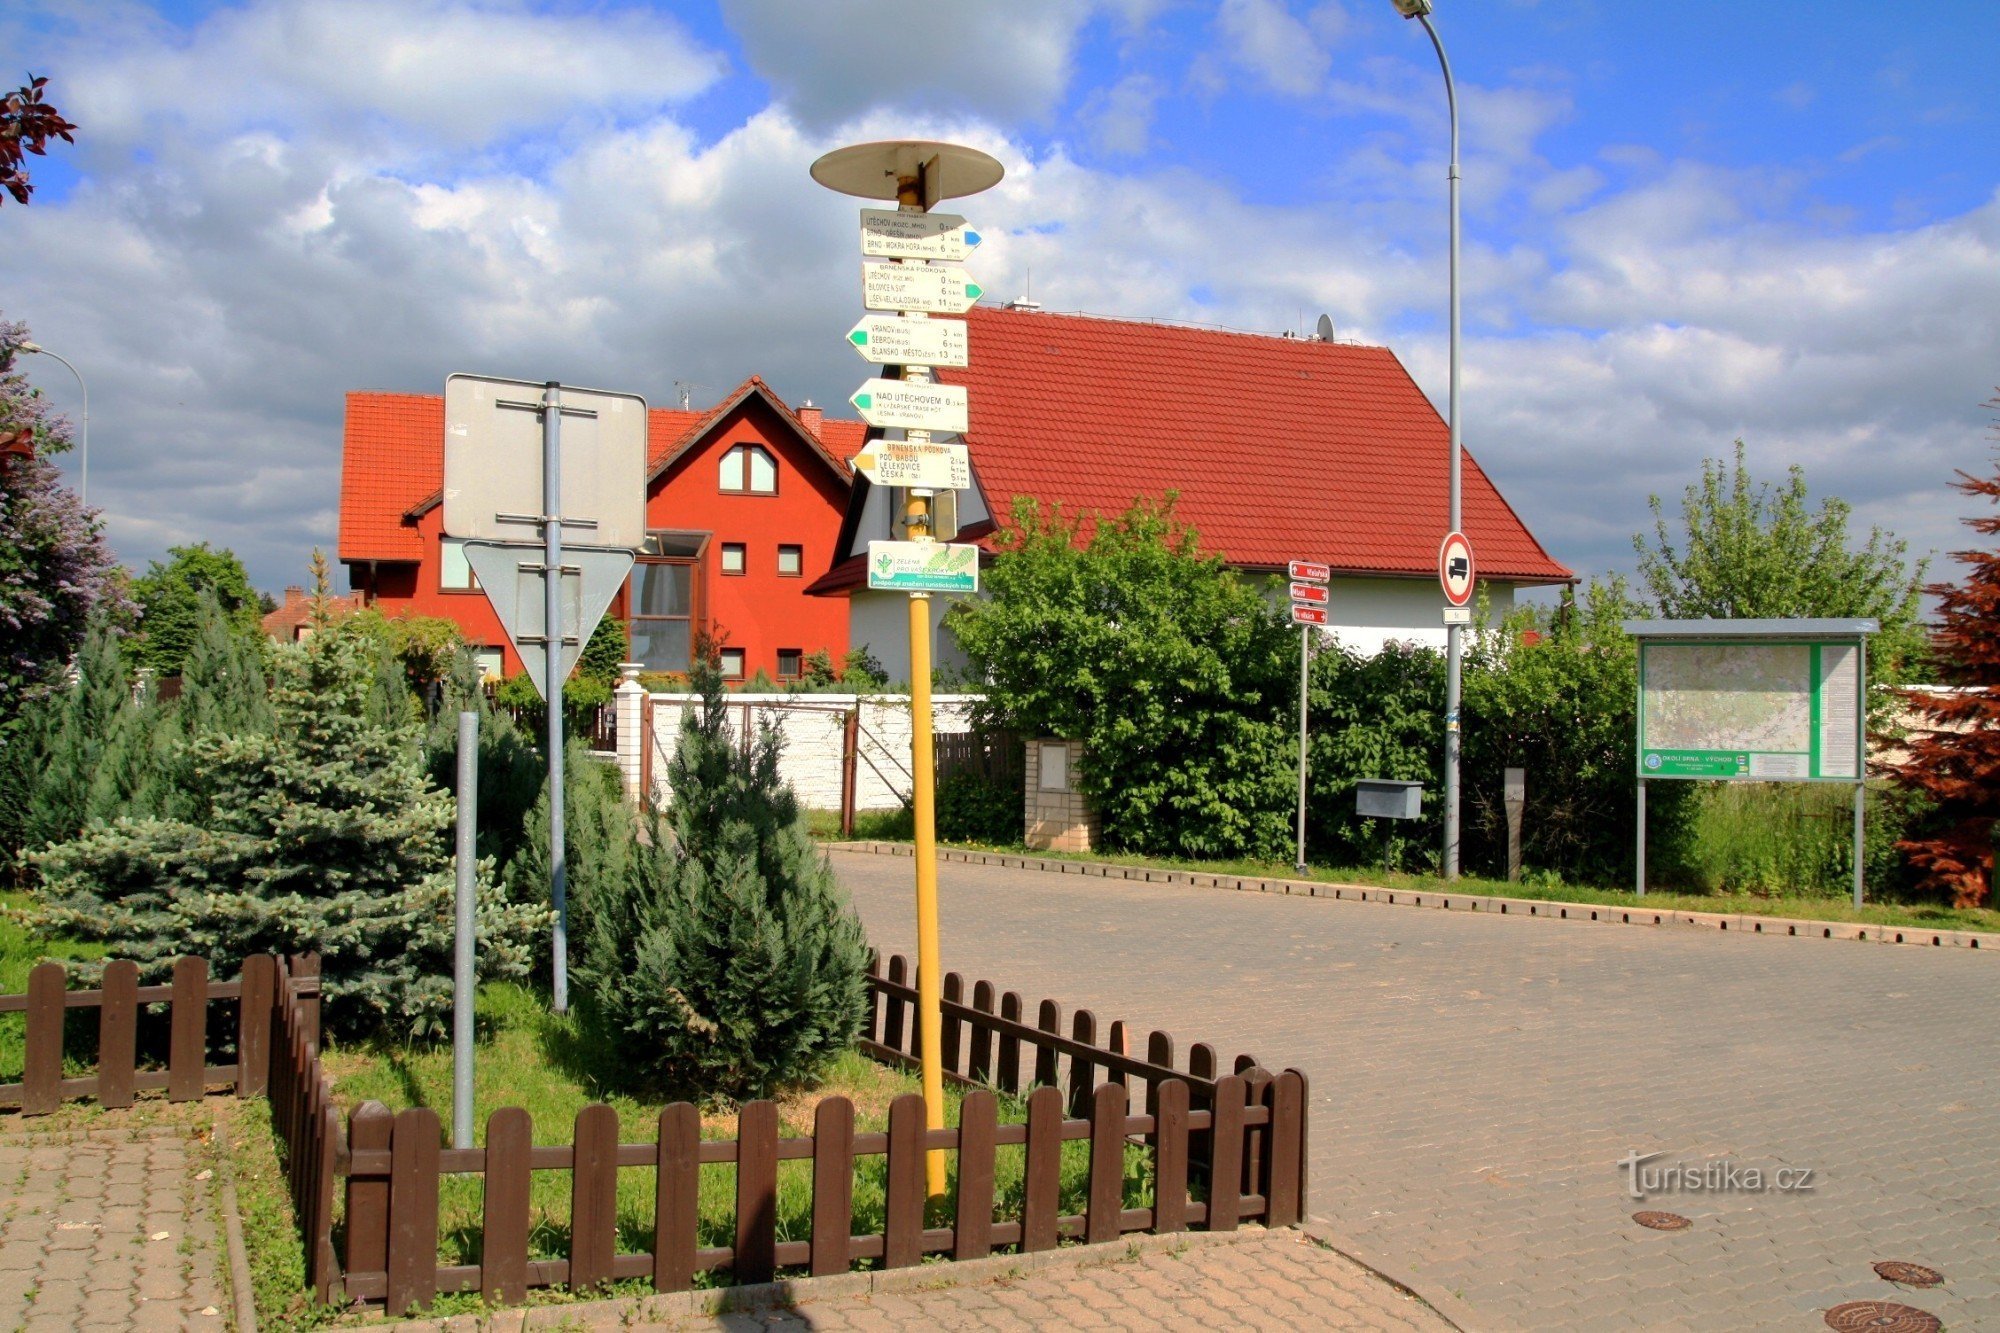 Principalul indicator turistic din Útěchov